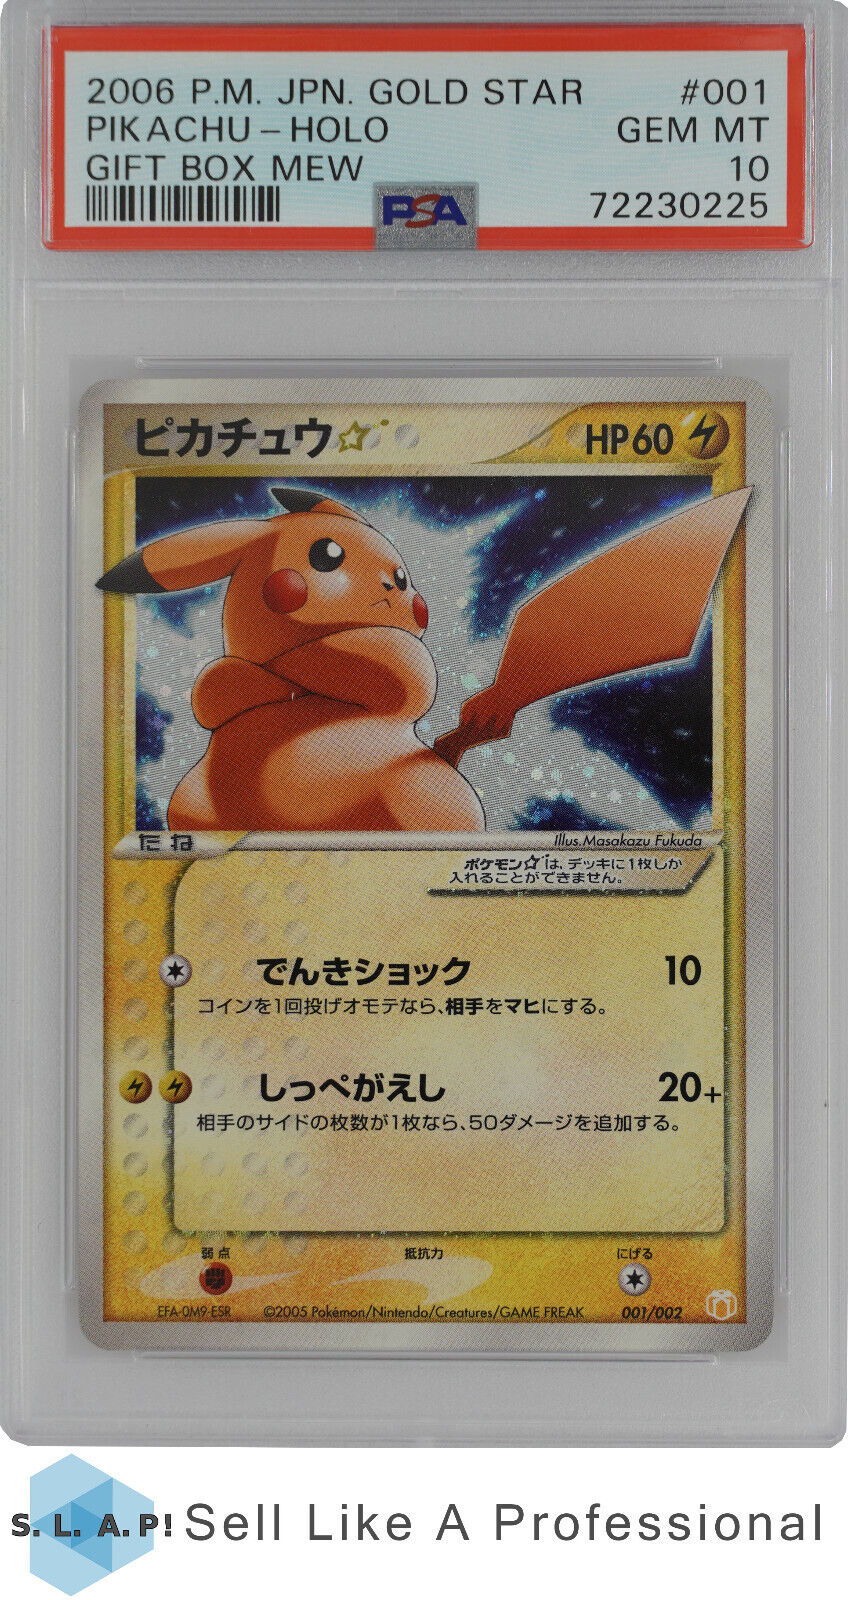 2006 Pokemon Japanese Gift Box MEW Pikachu Holo Goldstar 1 PSA 10